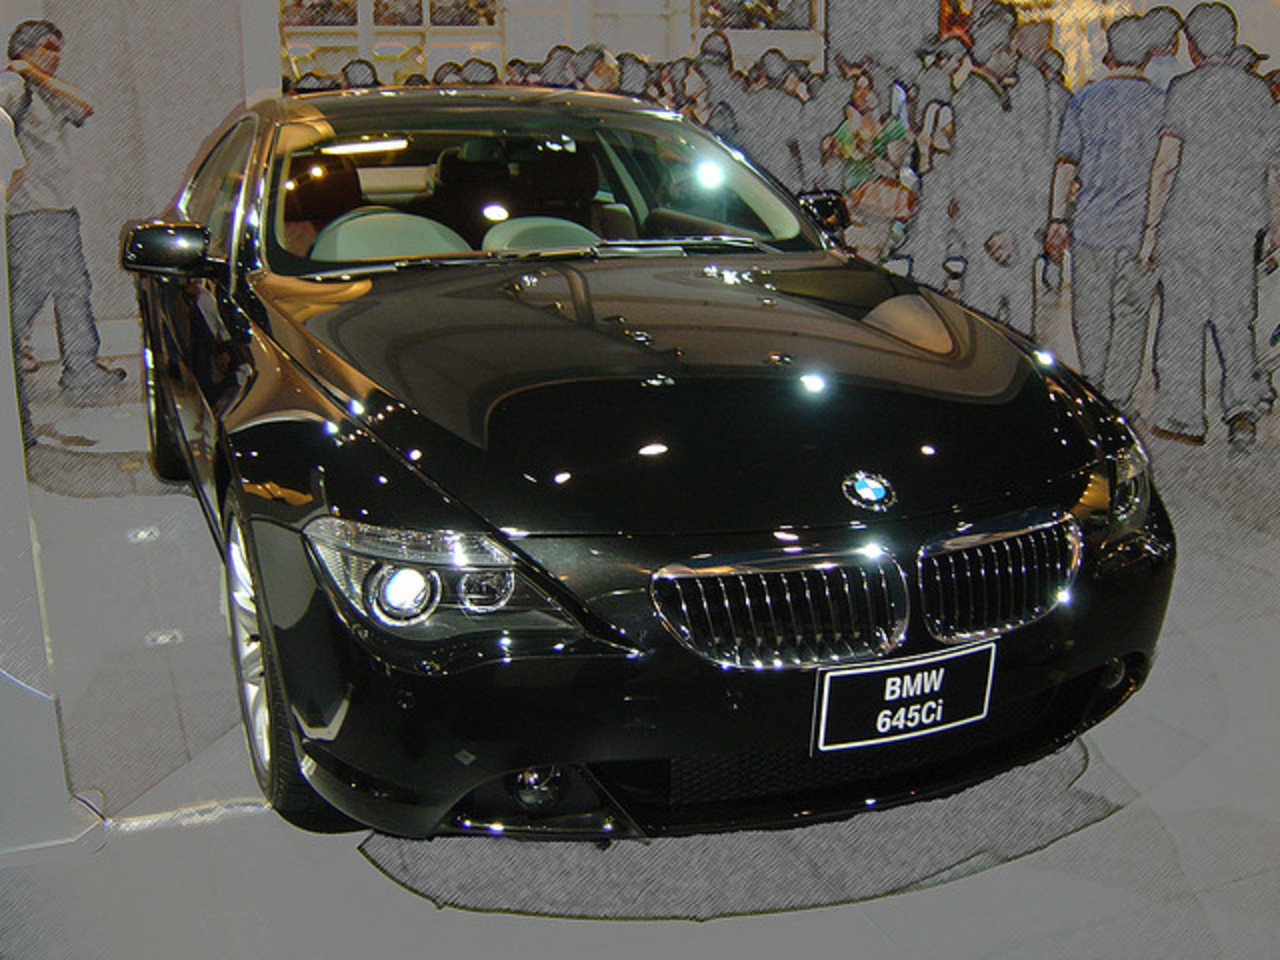 BMW 645Ci | Flickr - Photo Sharing!